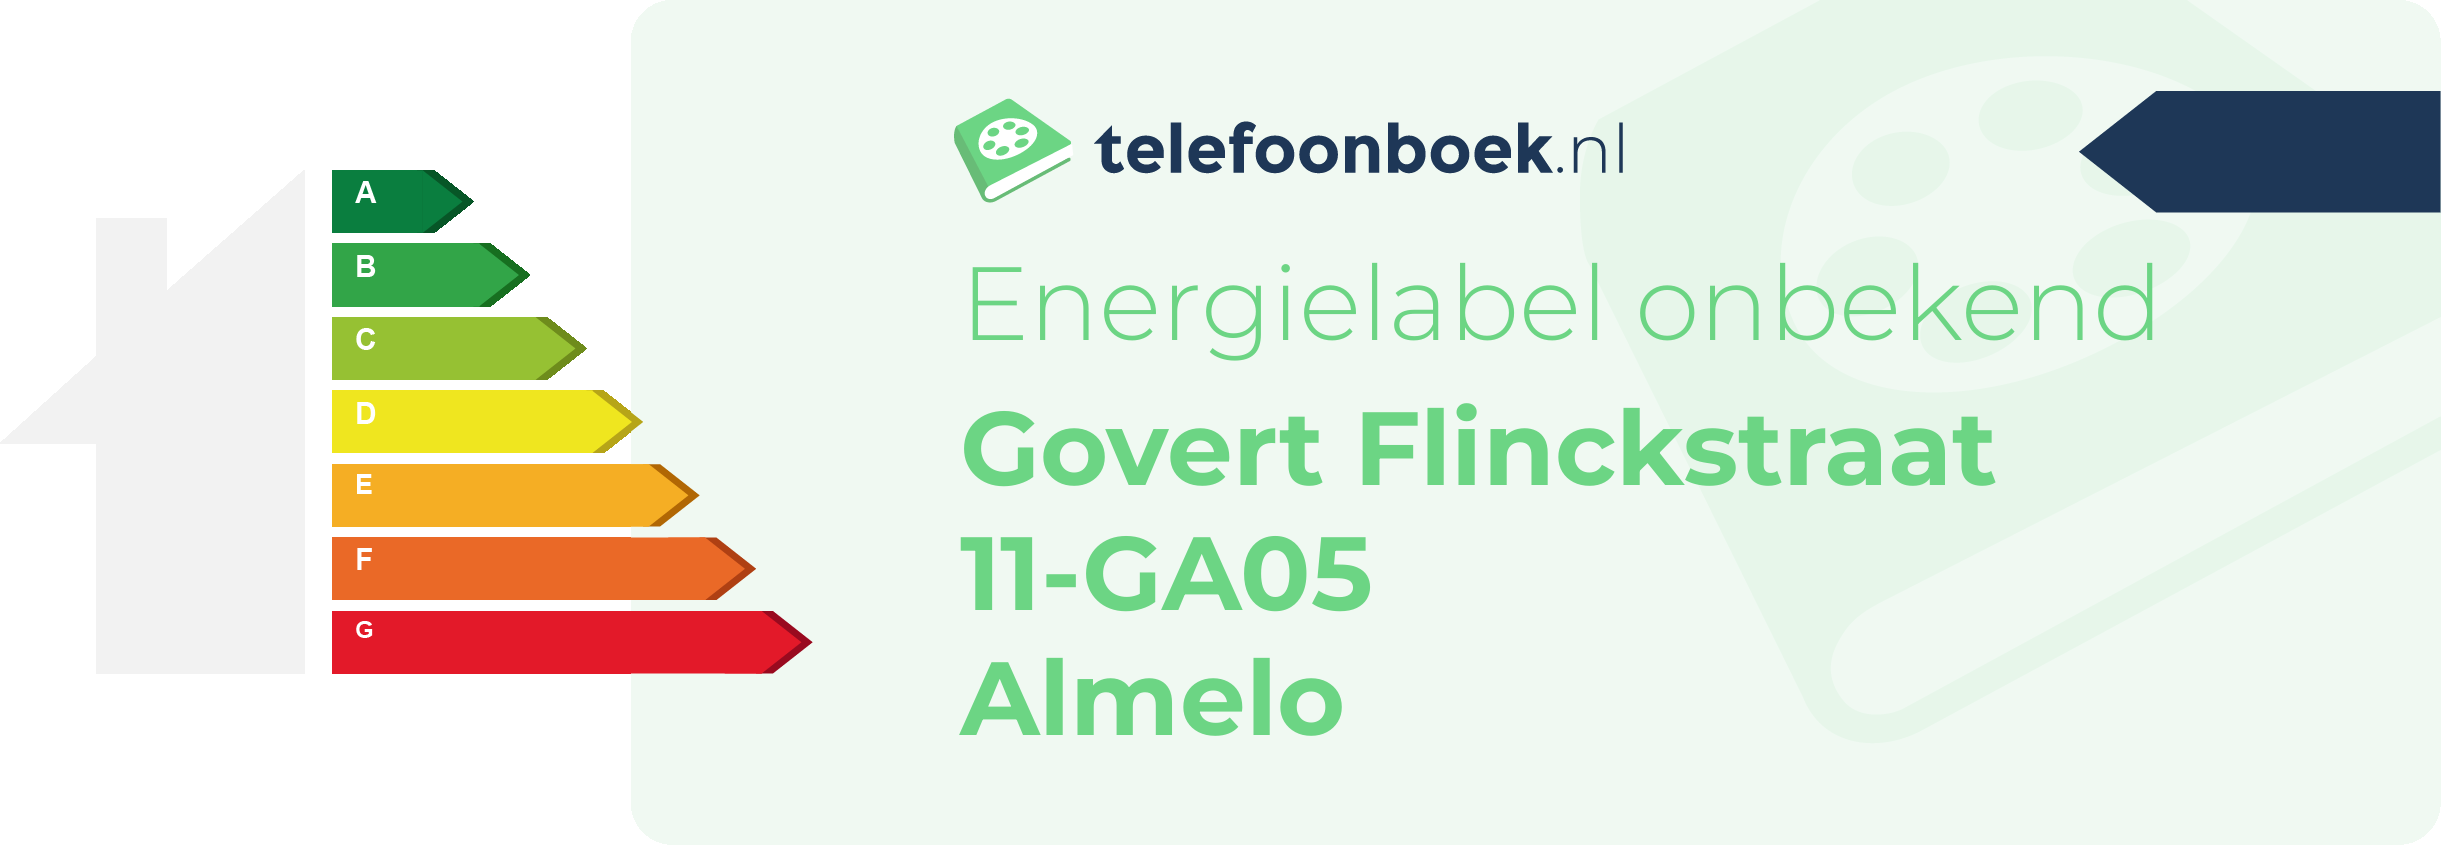 Energielabel Govert Flinckstraat 11-GA05 Almelo